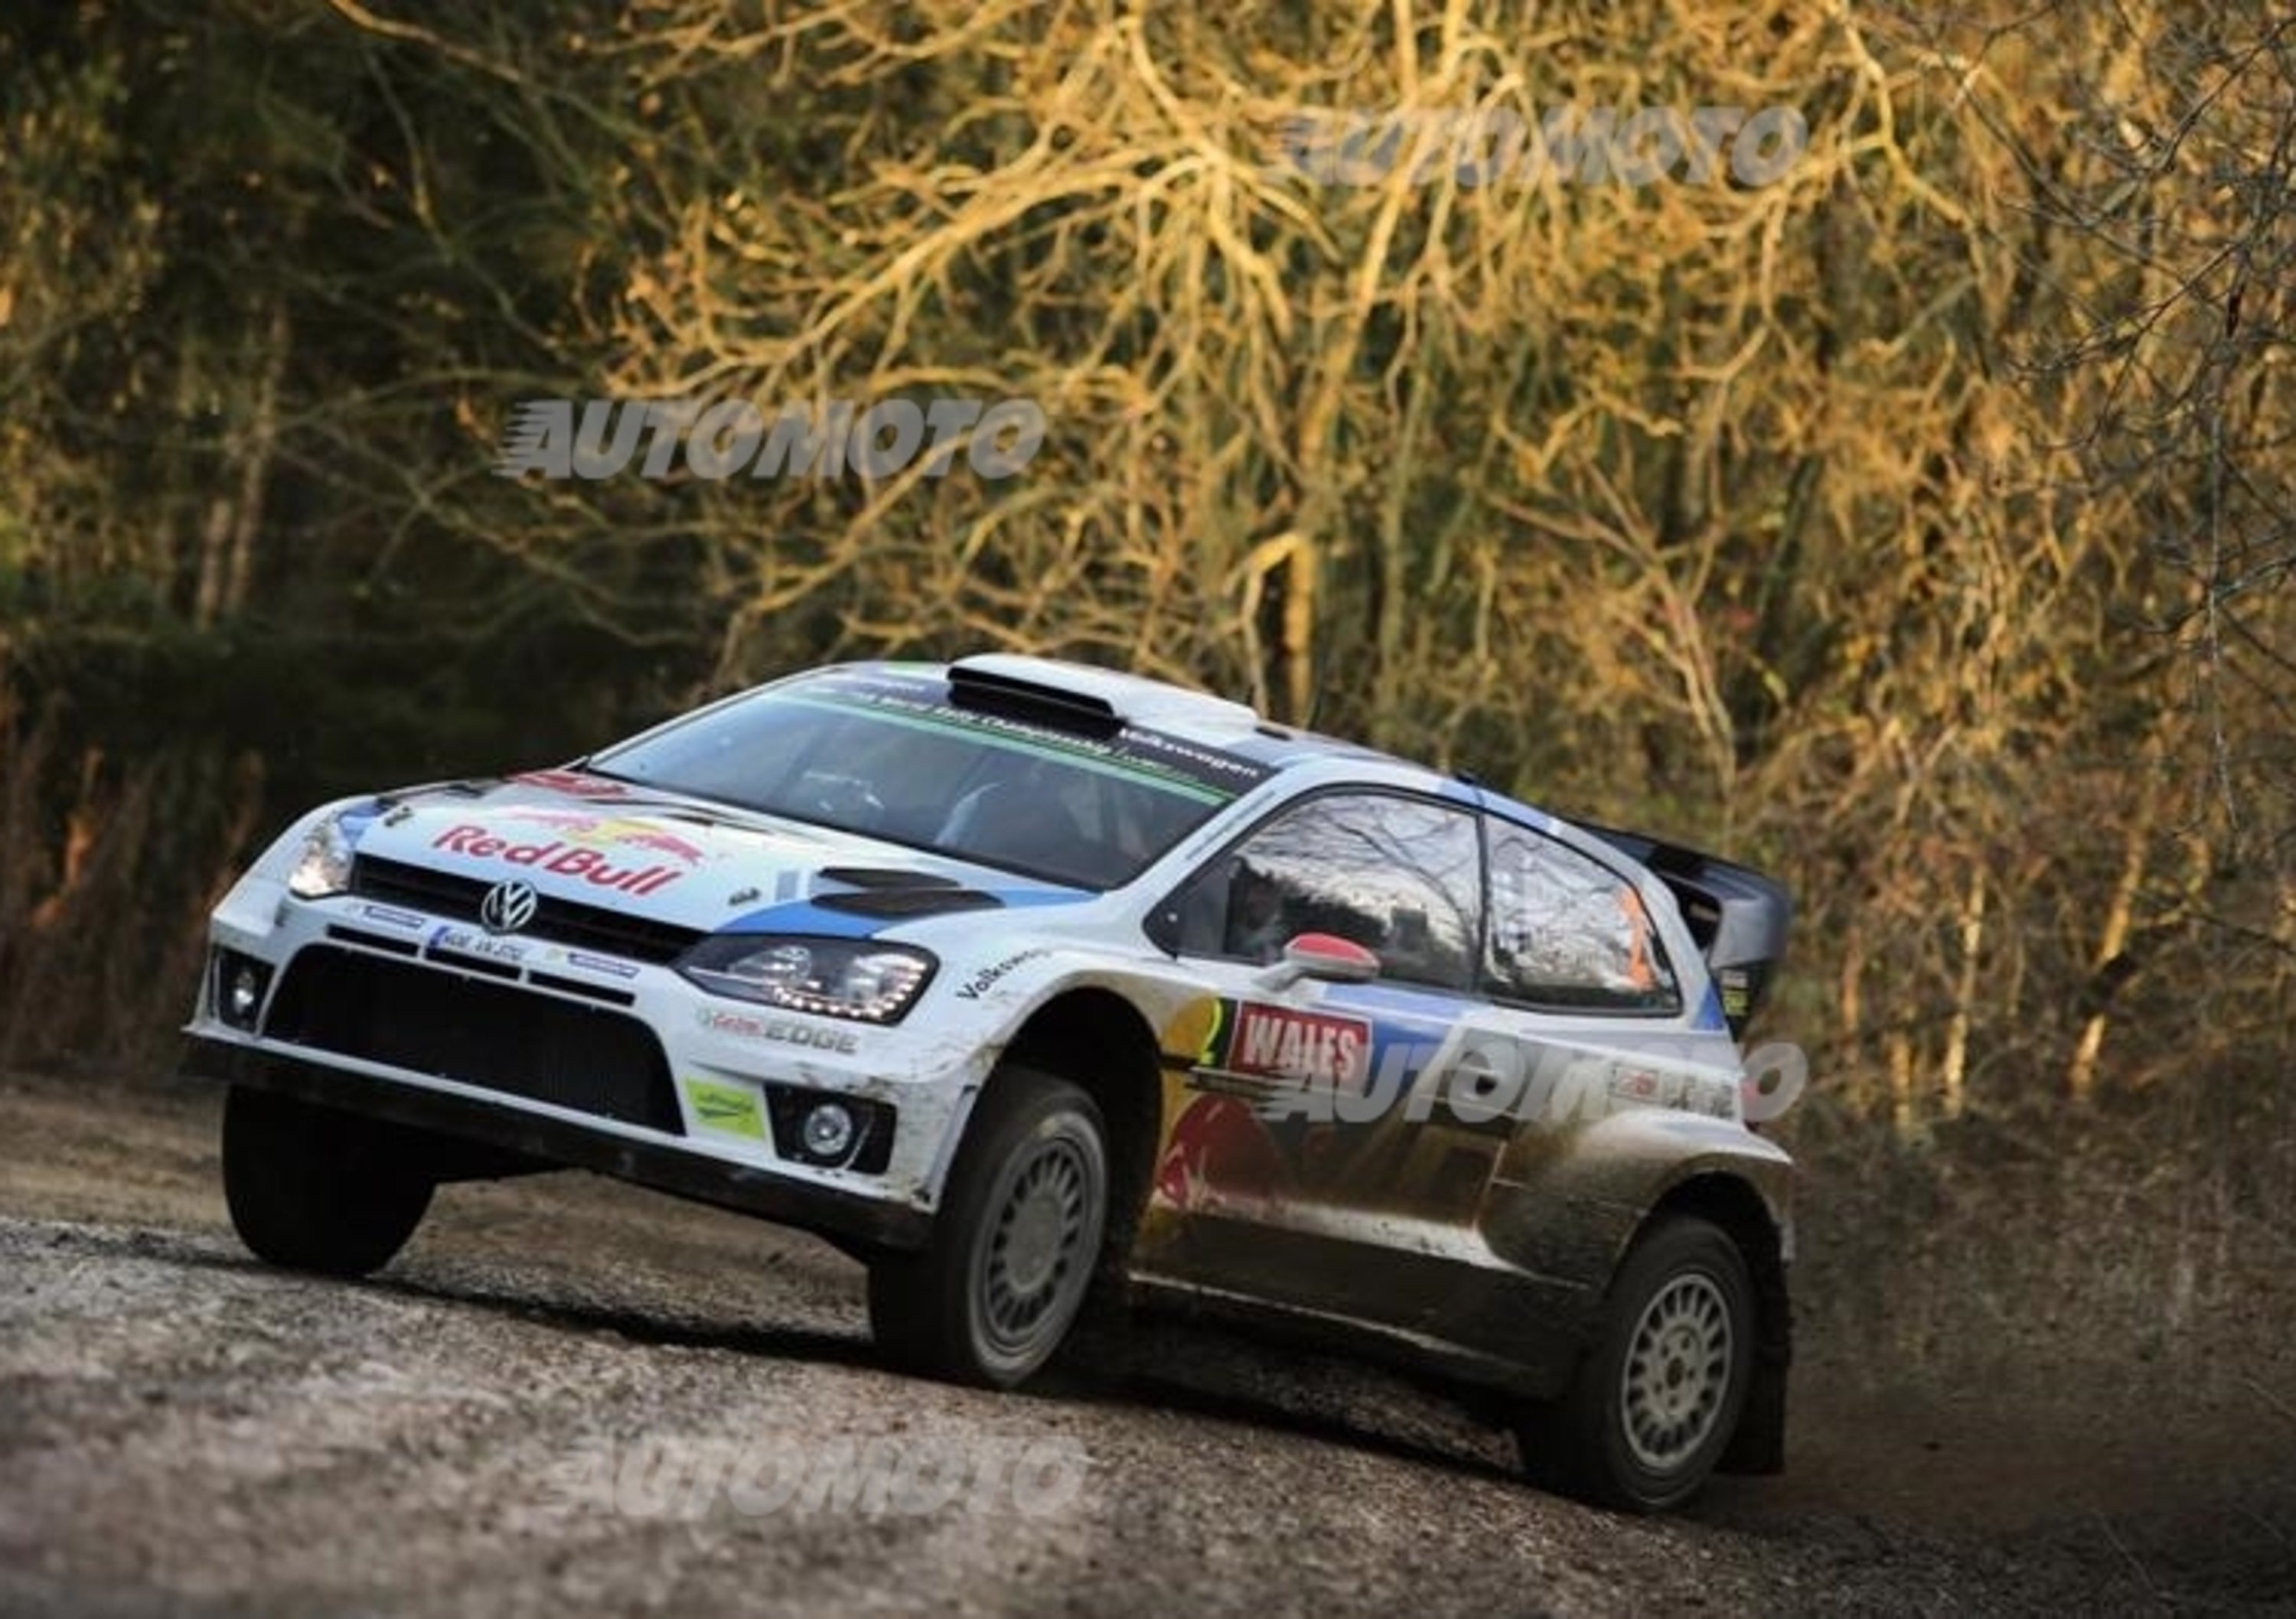 WRC Wales 2014, tiriamo le somme del Mondiale